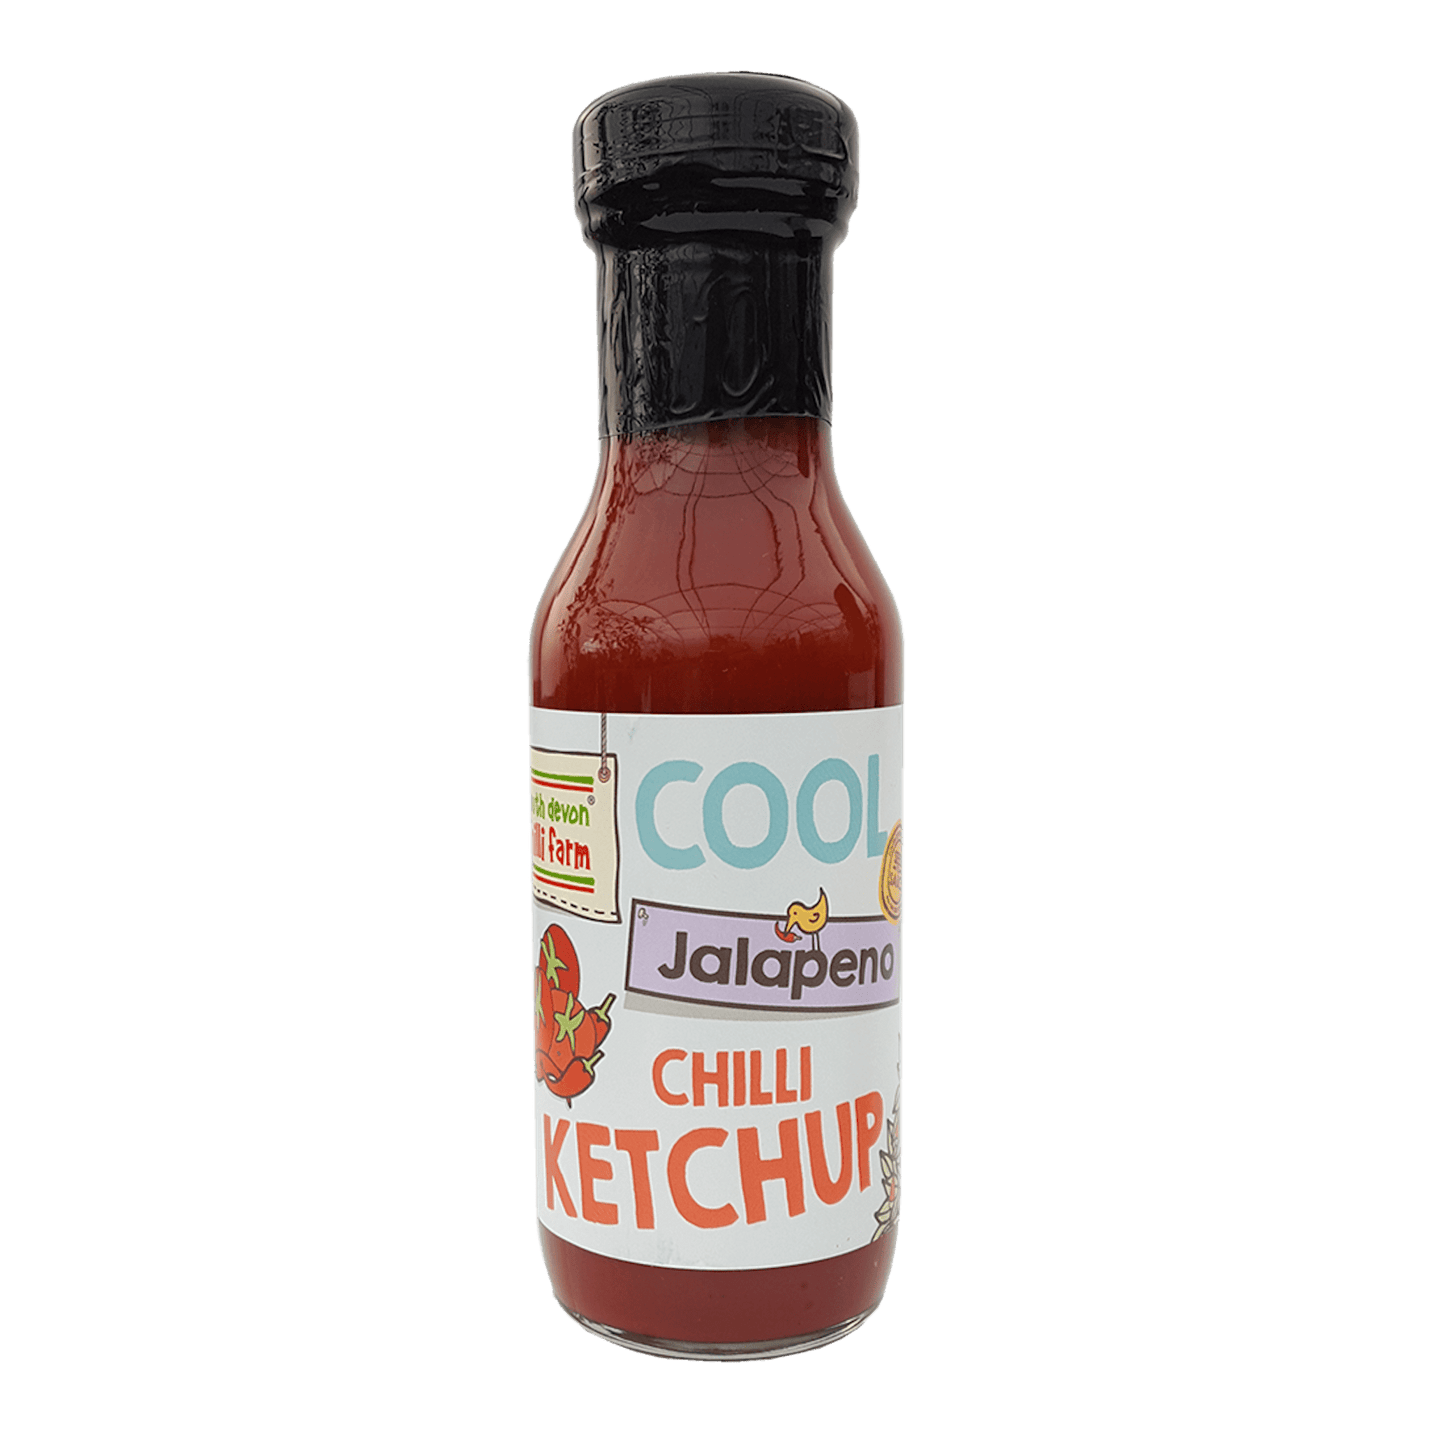 Cool Jalapeno Chilli Ketchup (280g)